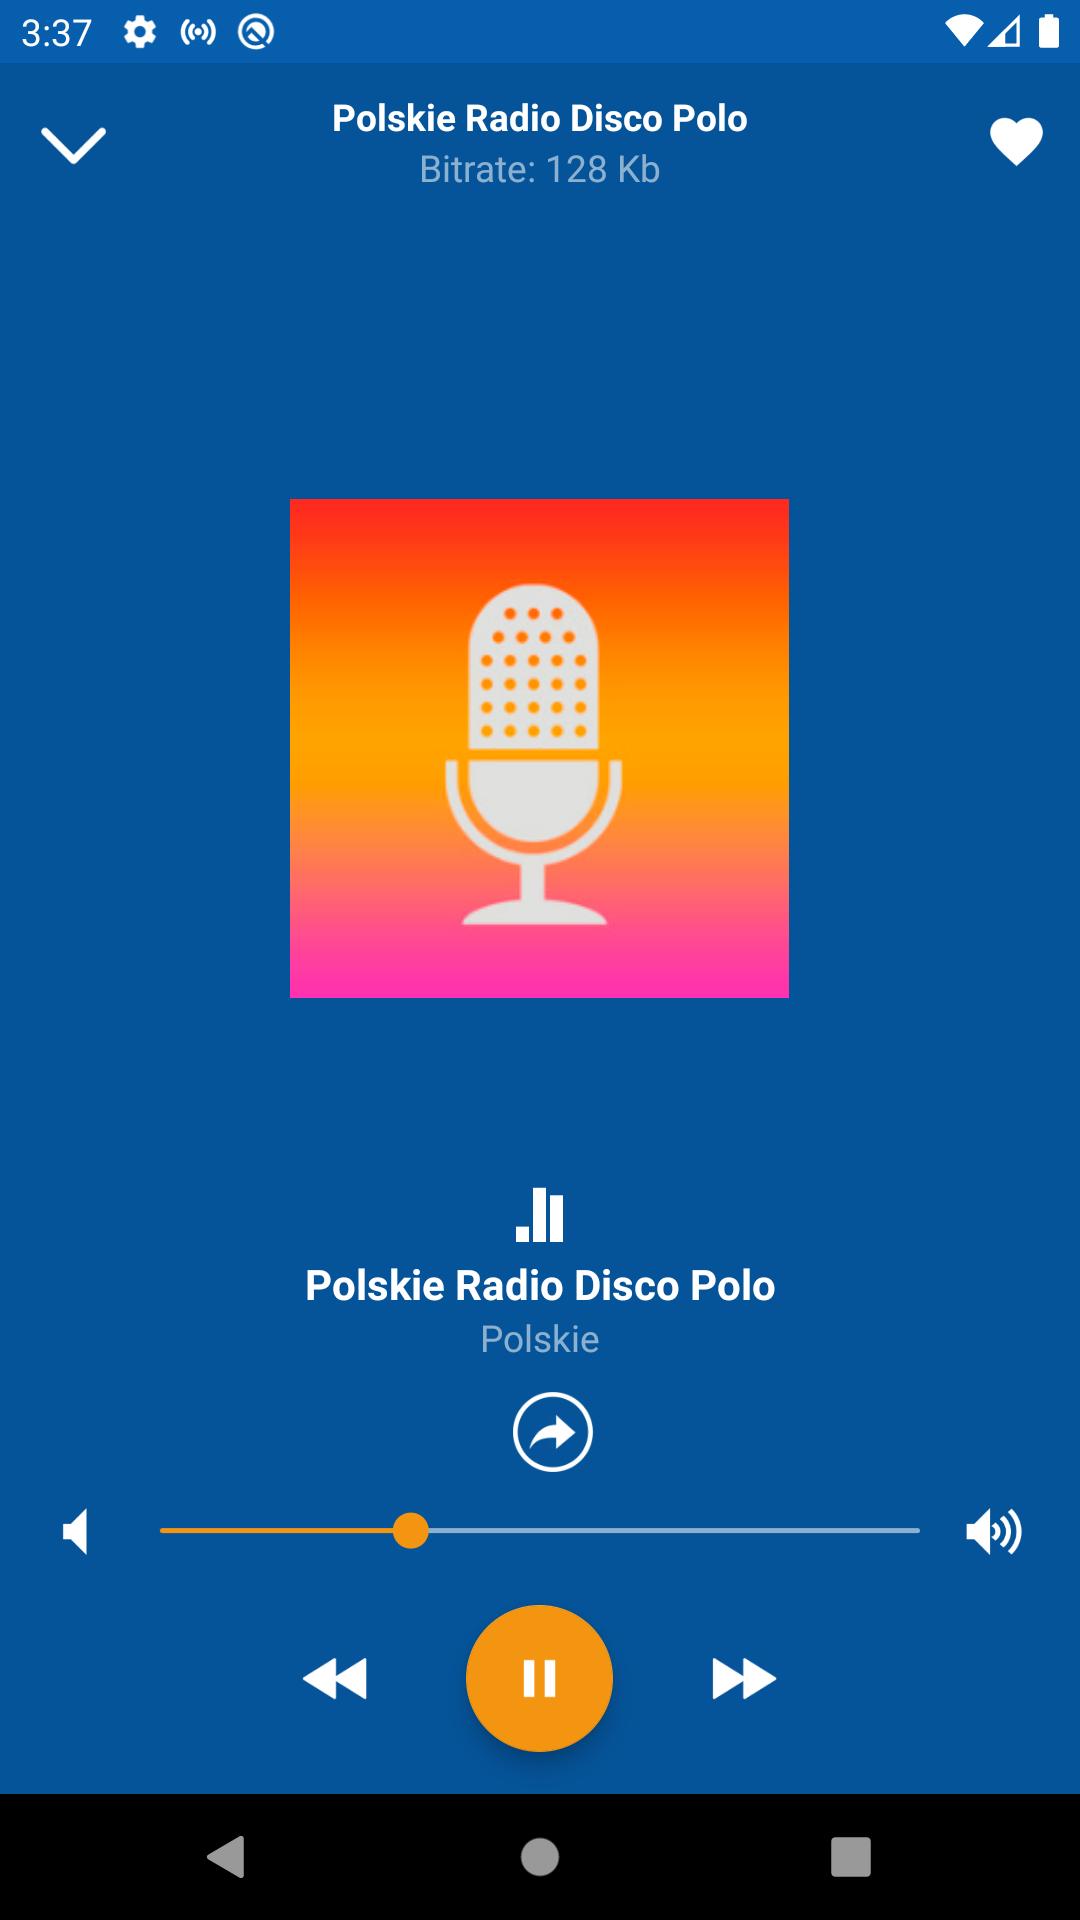 polskie radio disco polo APK for Android Download